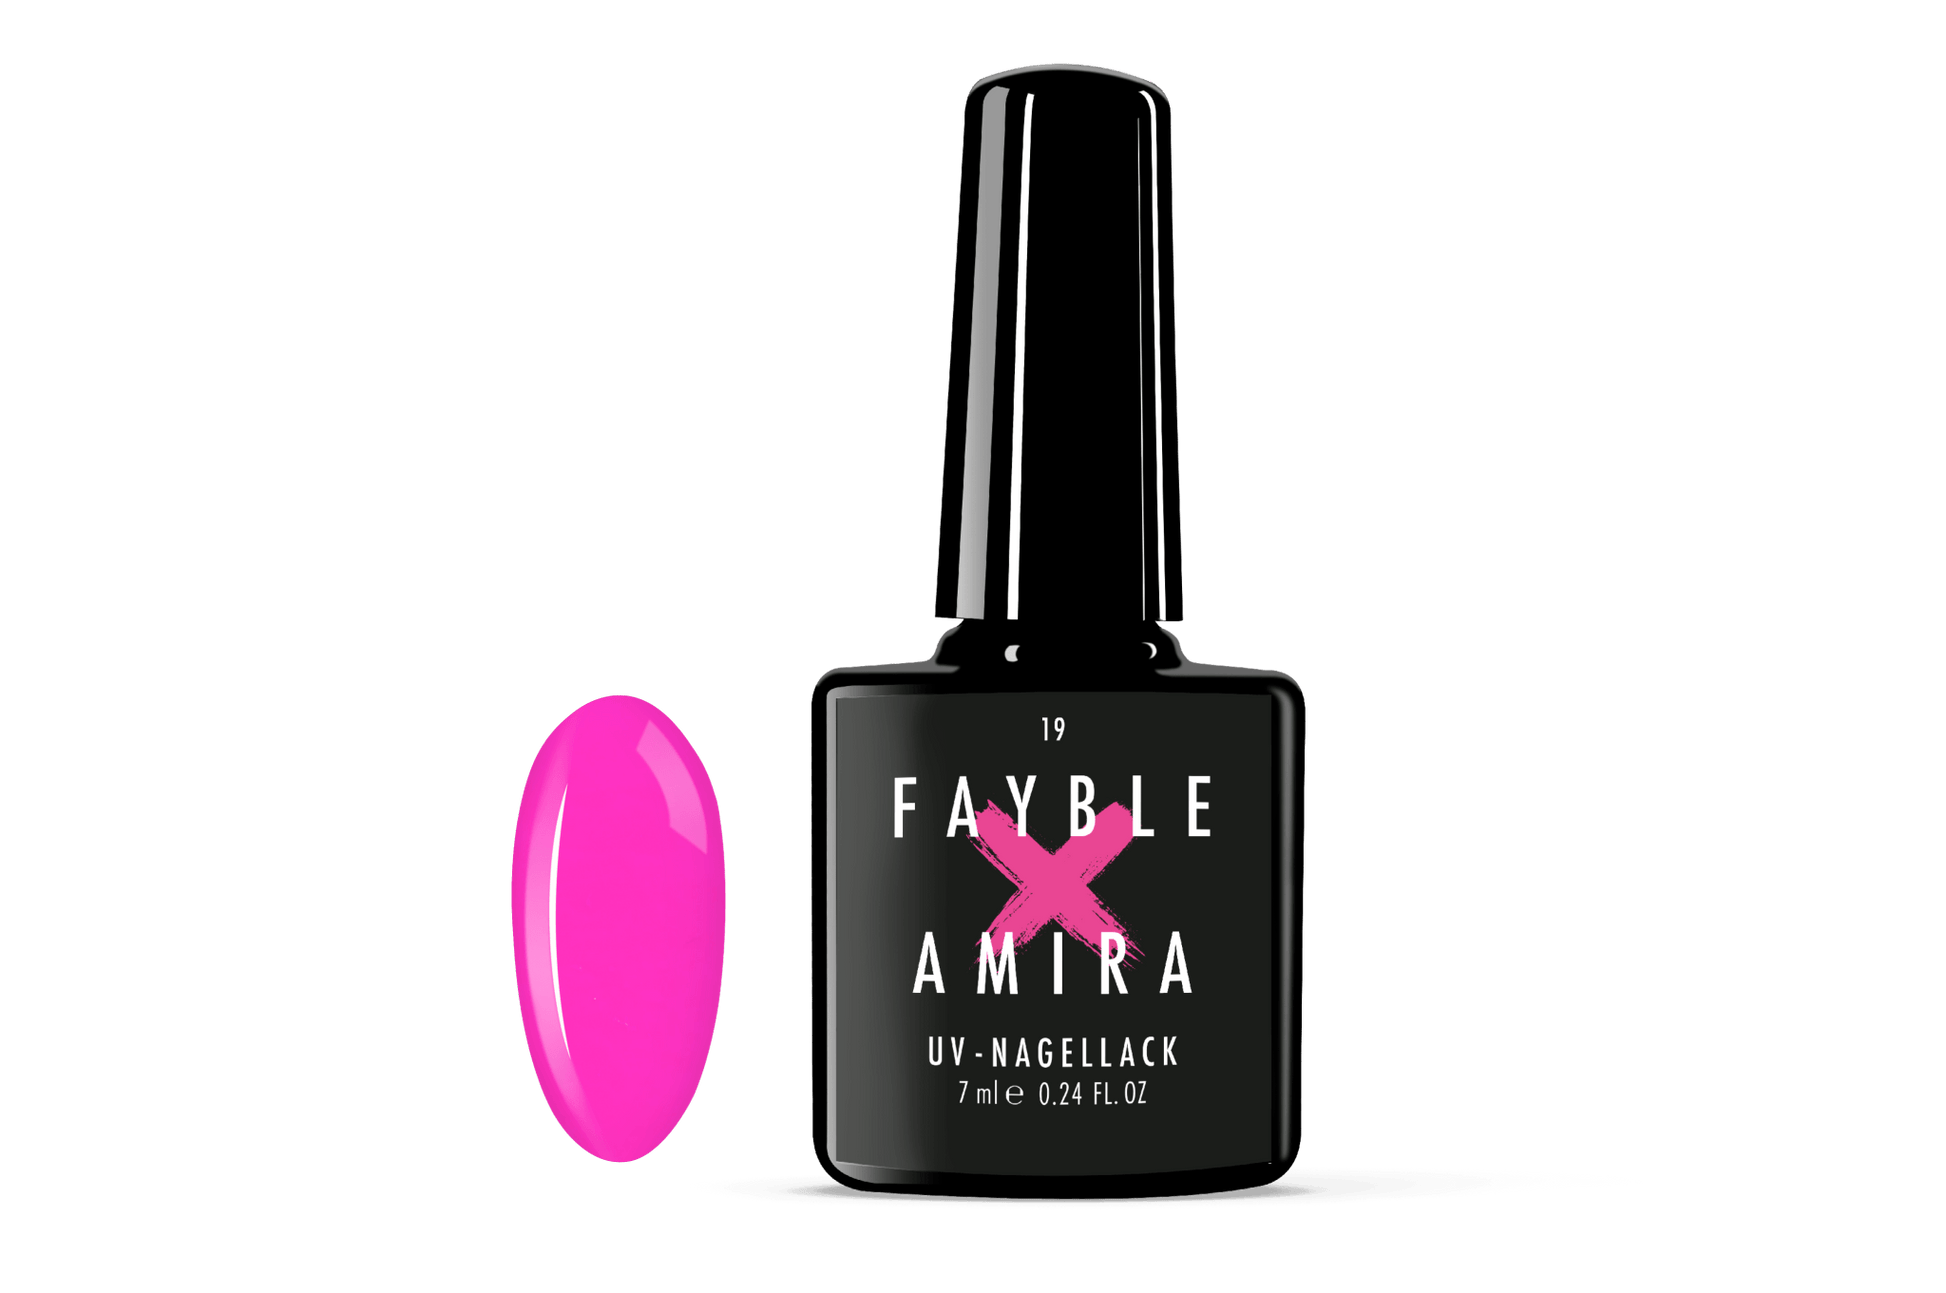 FAYBLE × AMIRA | UV-Nagellack 19 - FAYBLE